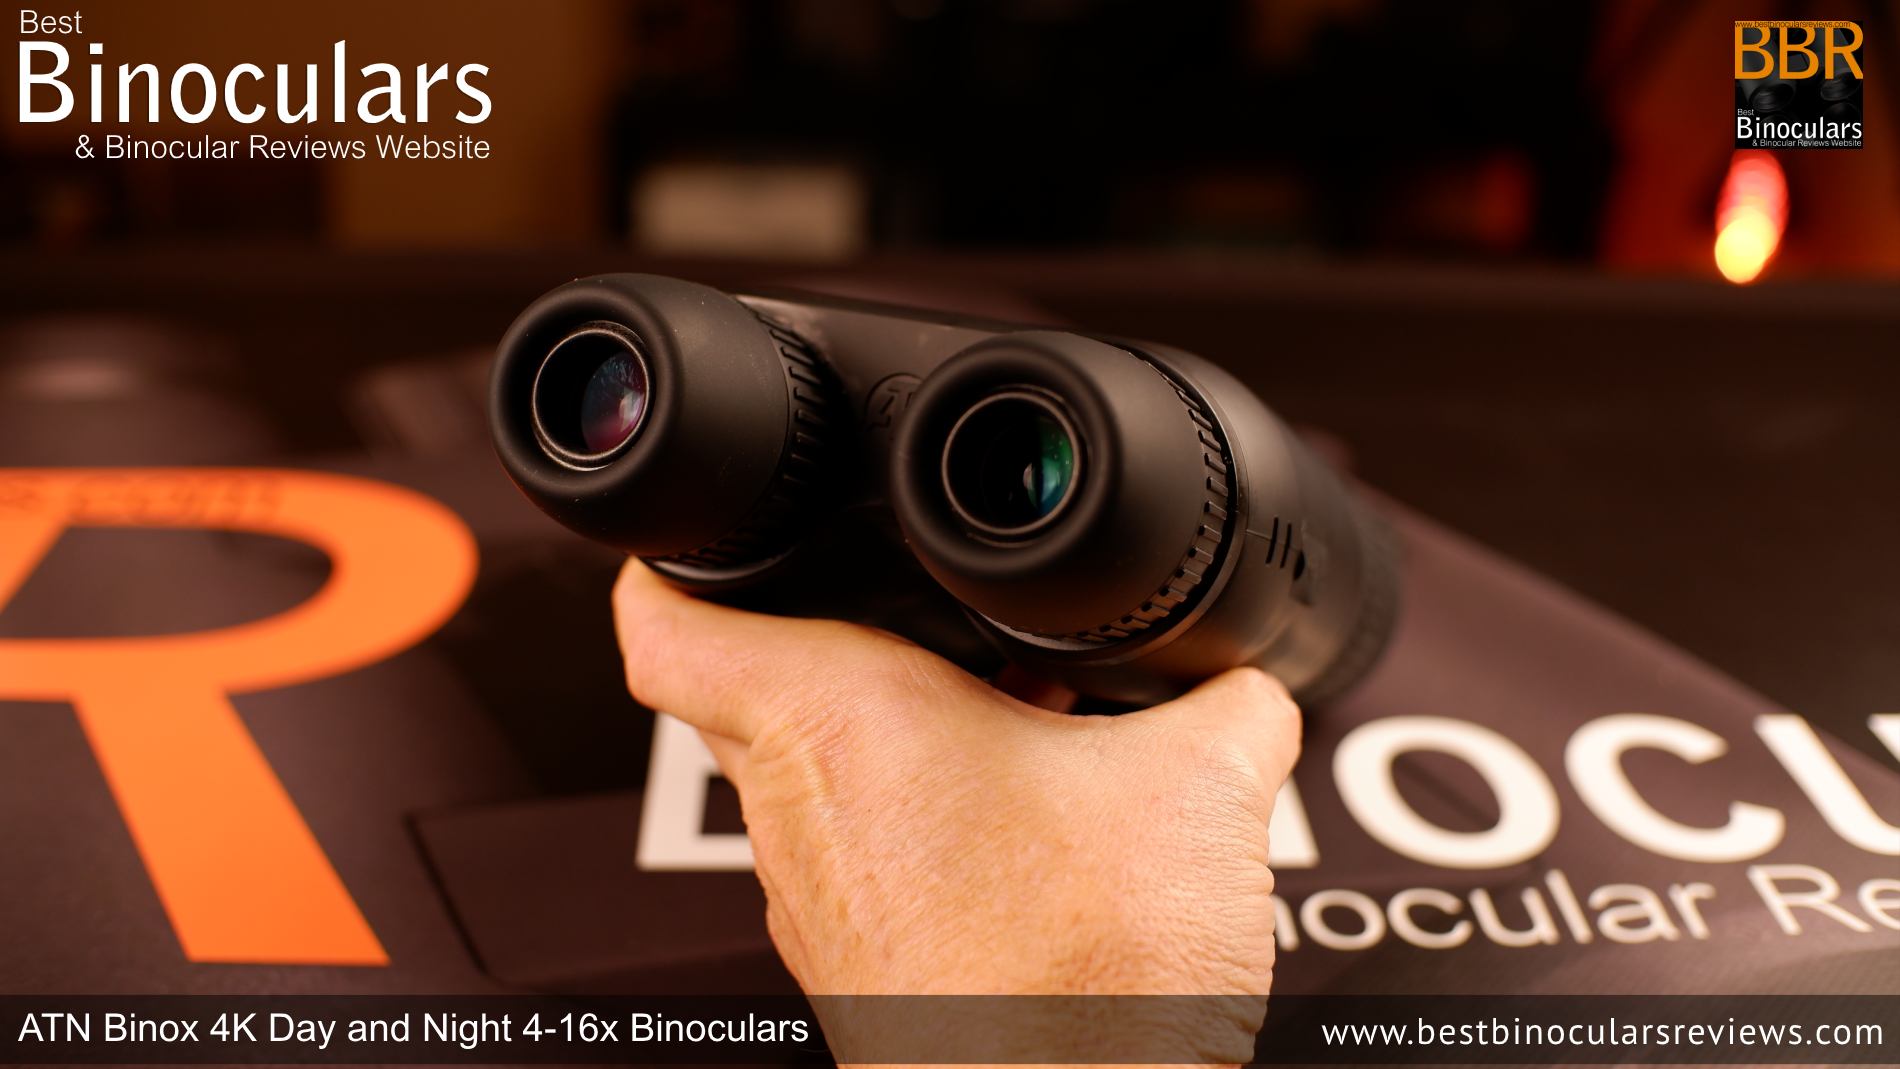 The two eyepieces on the ATN Binox 4K Binoculars